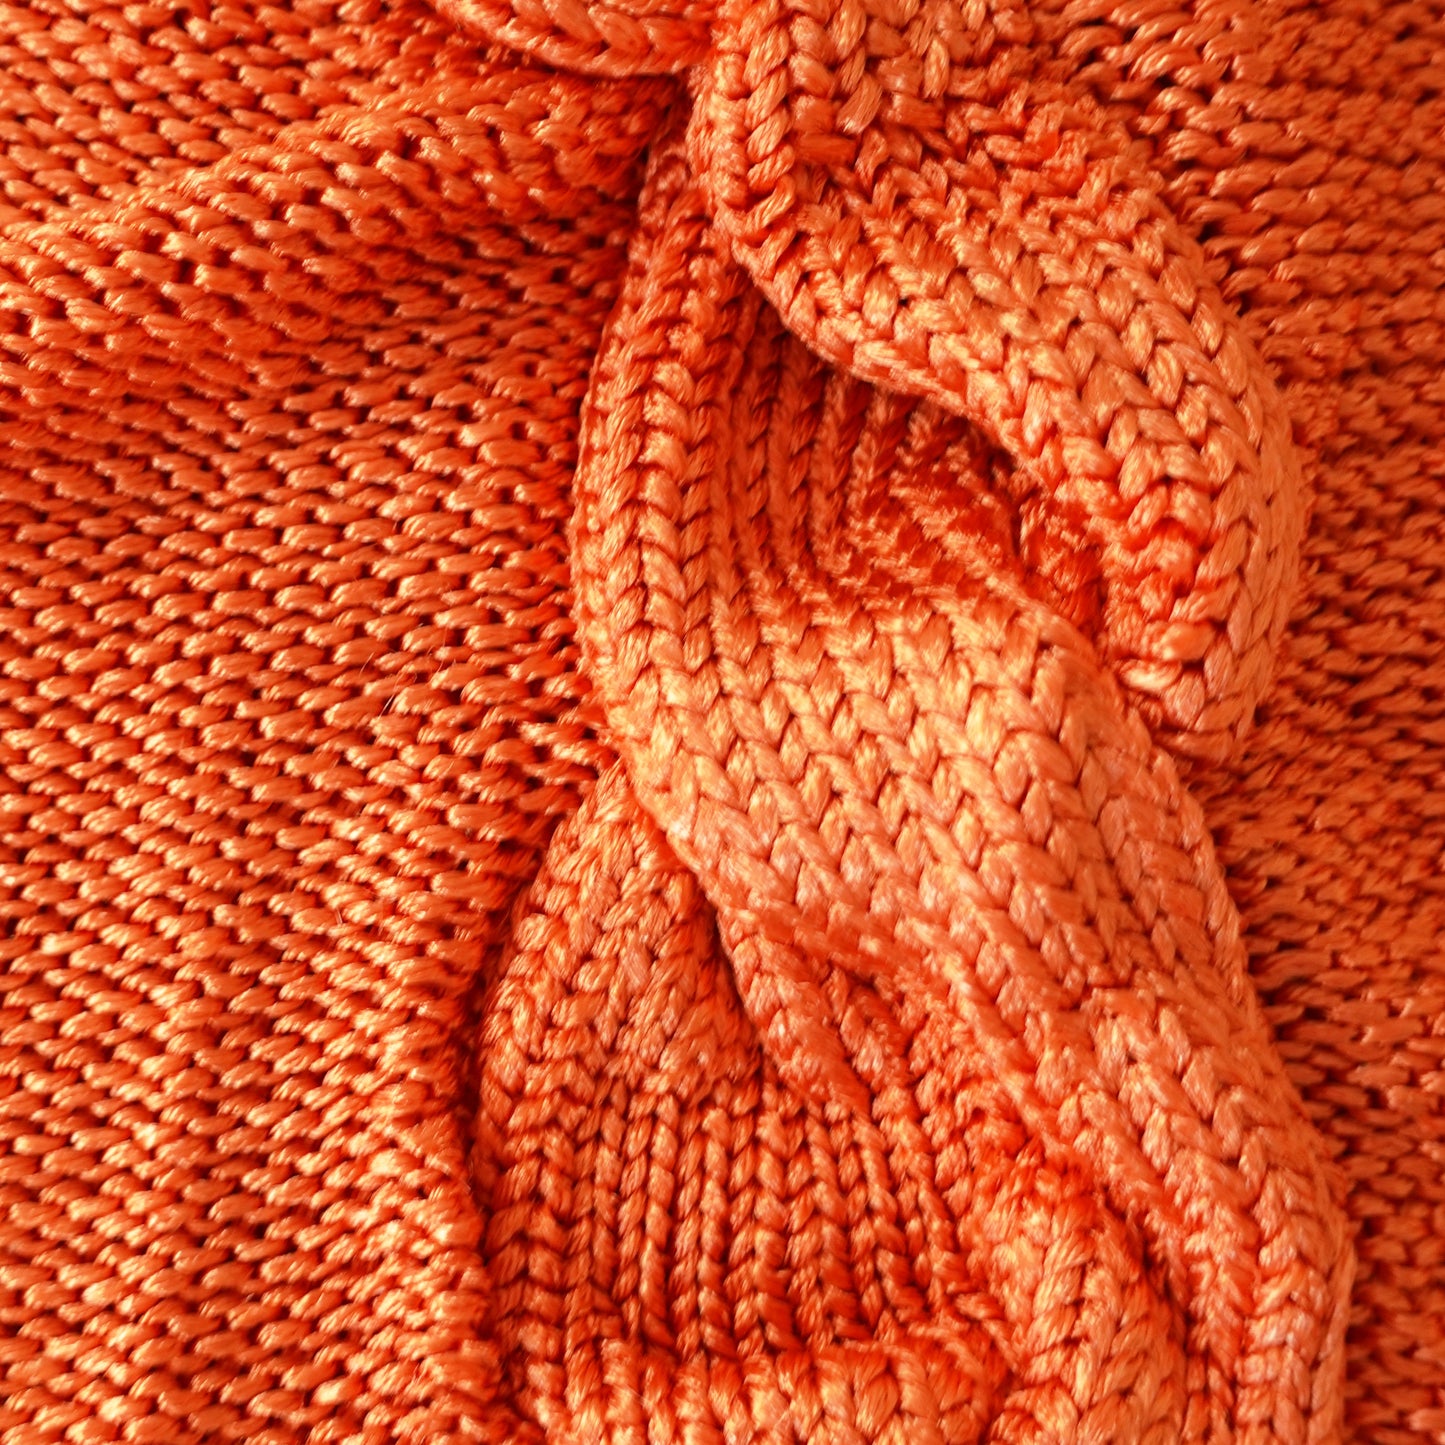 orange knit tank top